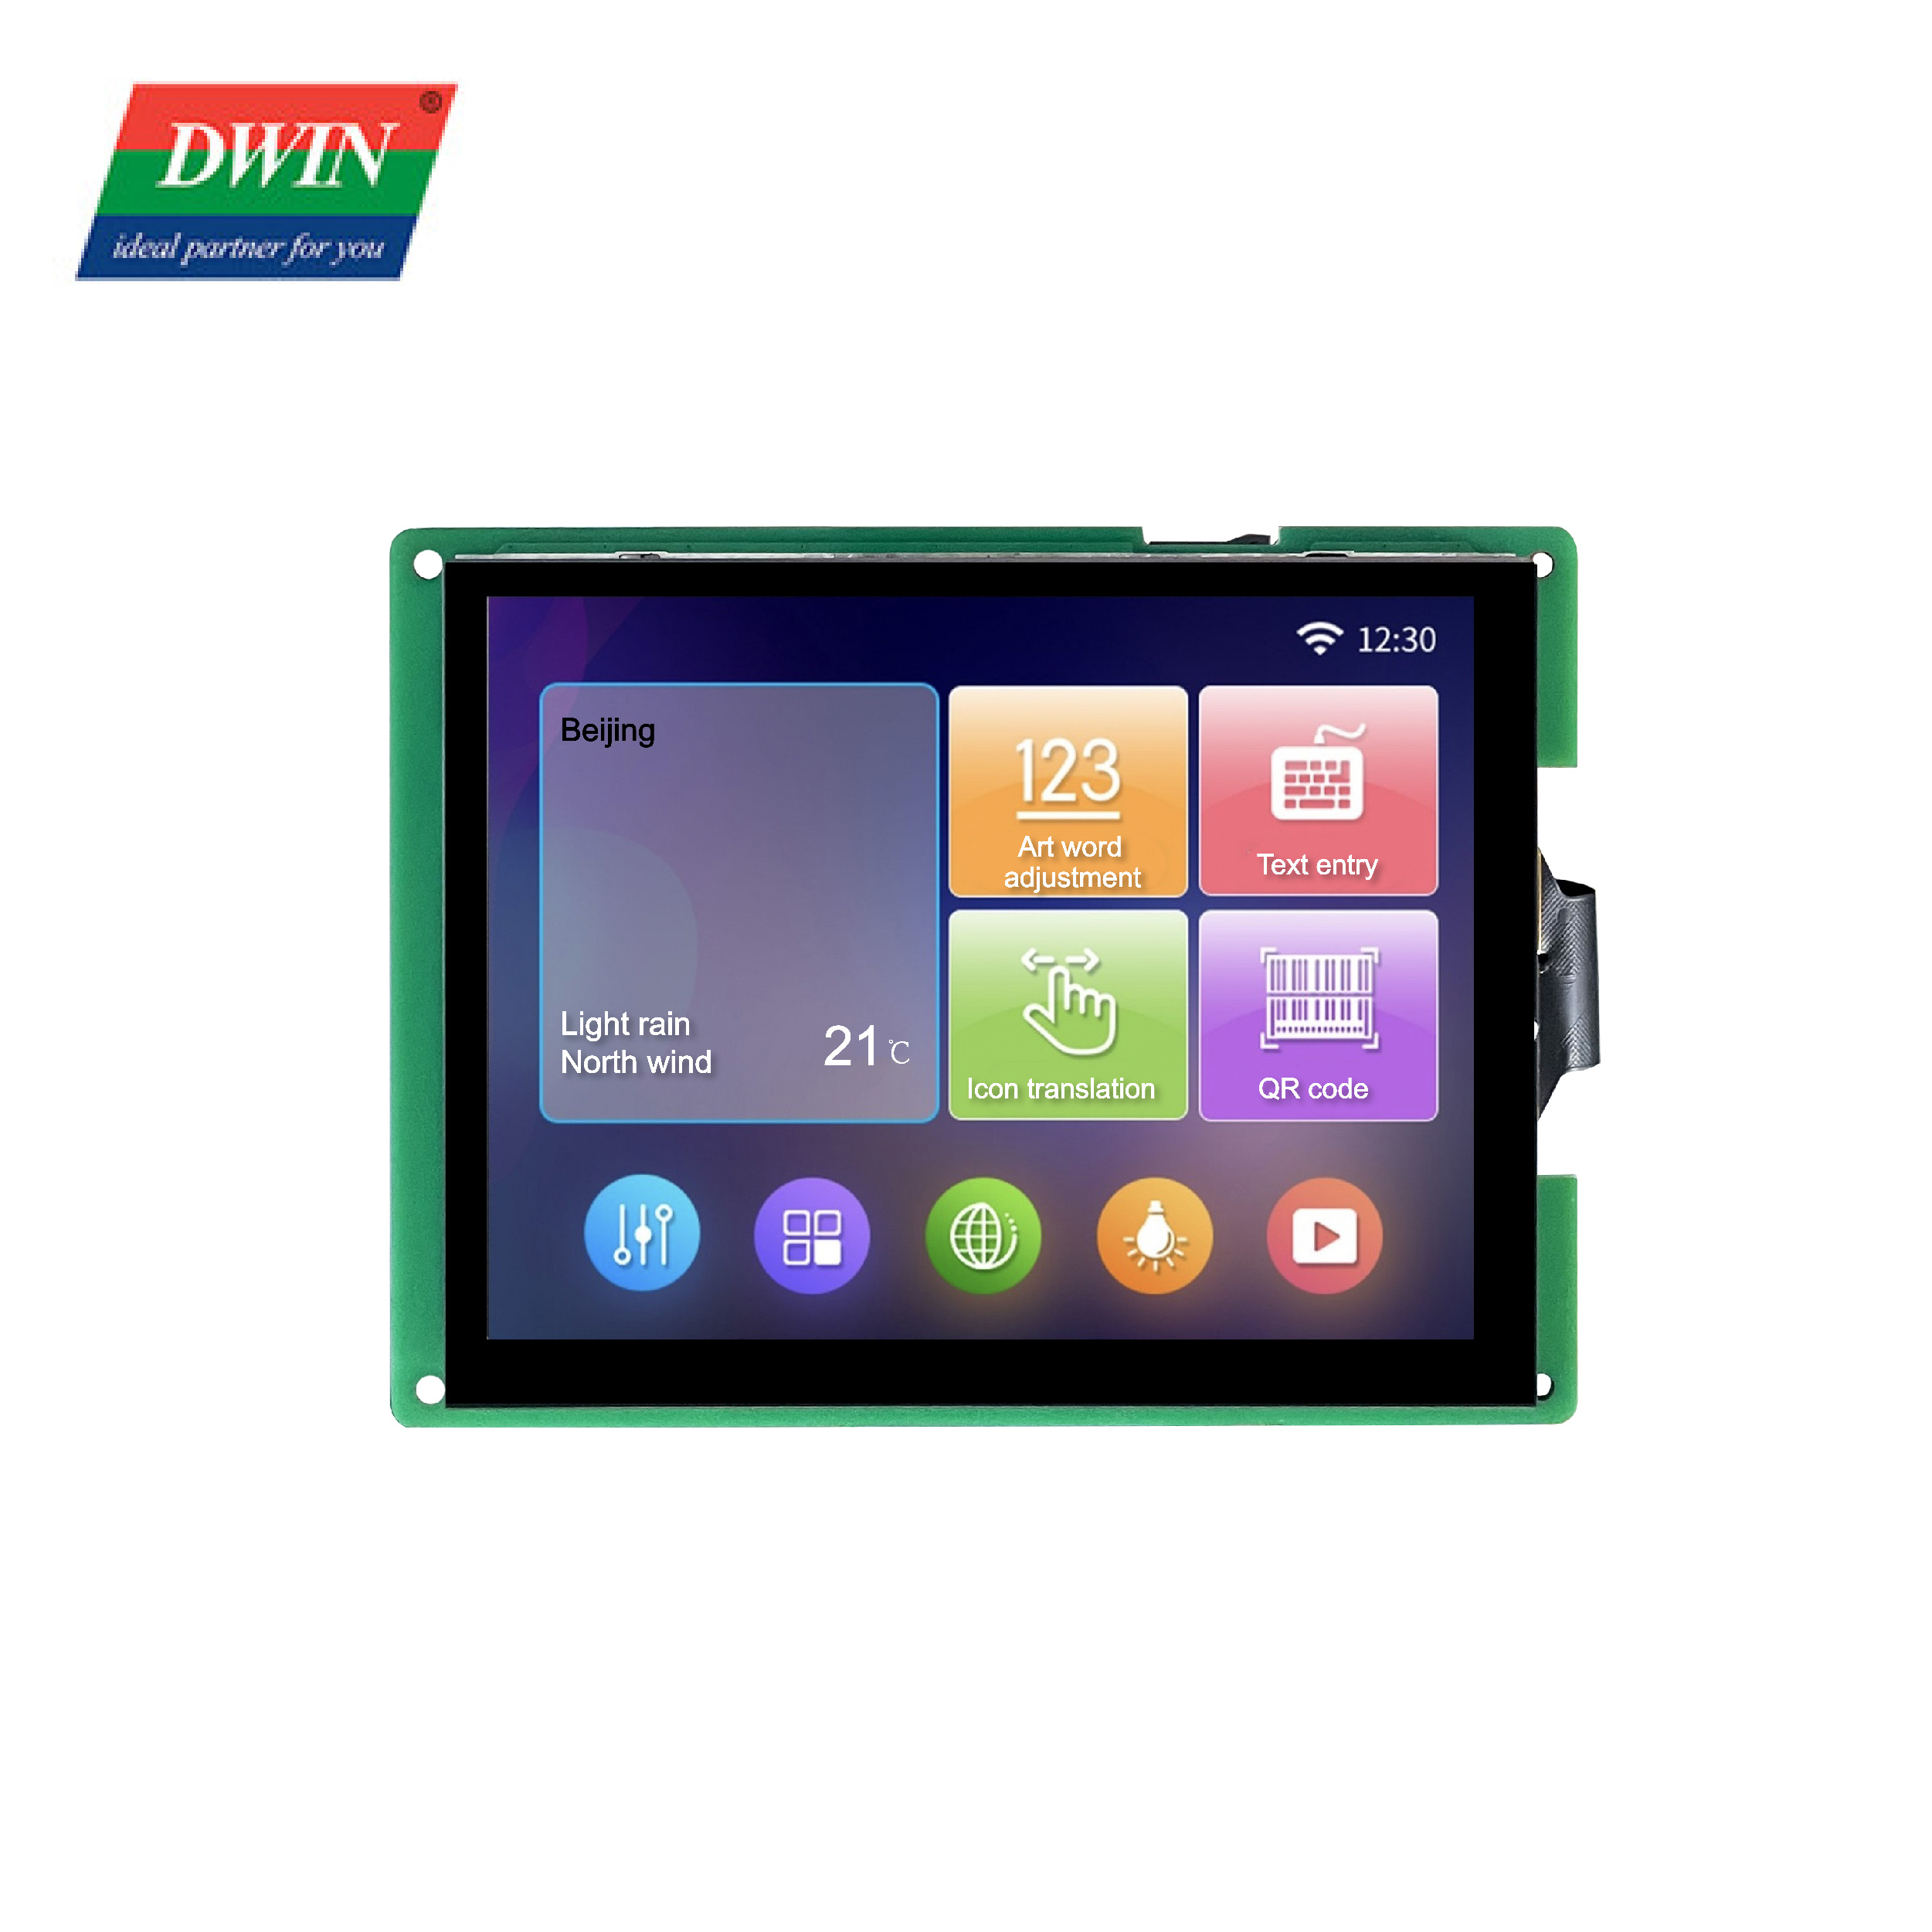 پنل لمسی LCD هوشمند 5.7 اینچی DMG64480T057_01W (درجه صنعتی)